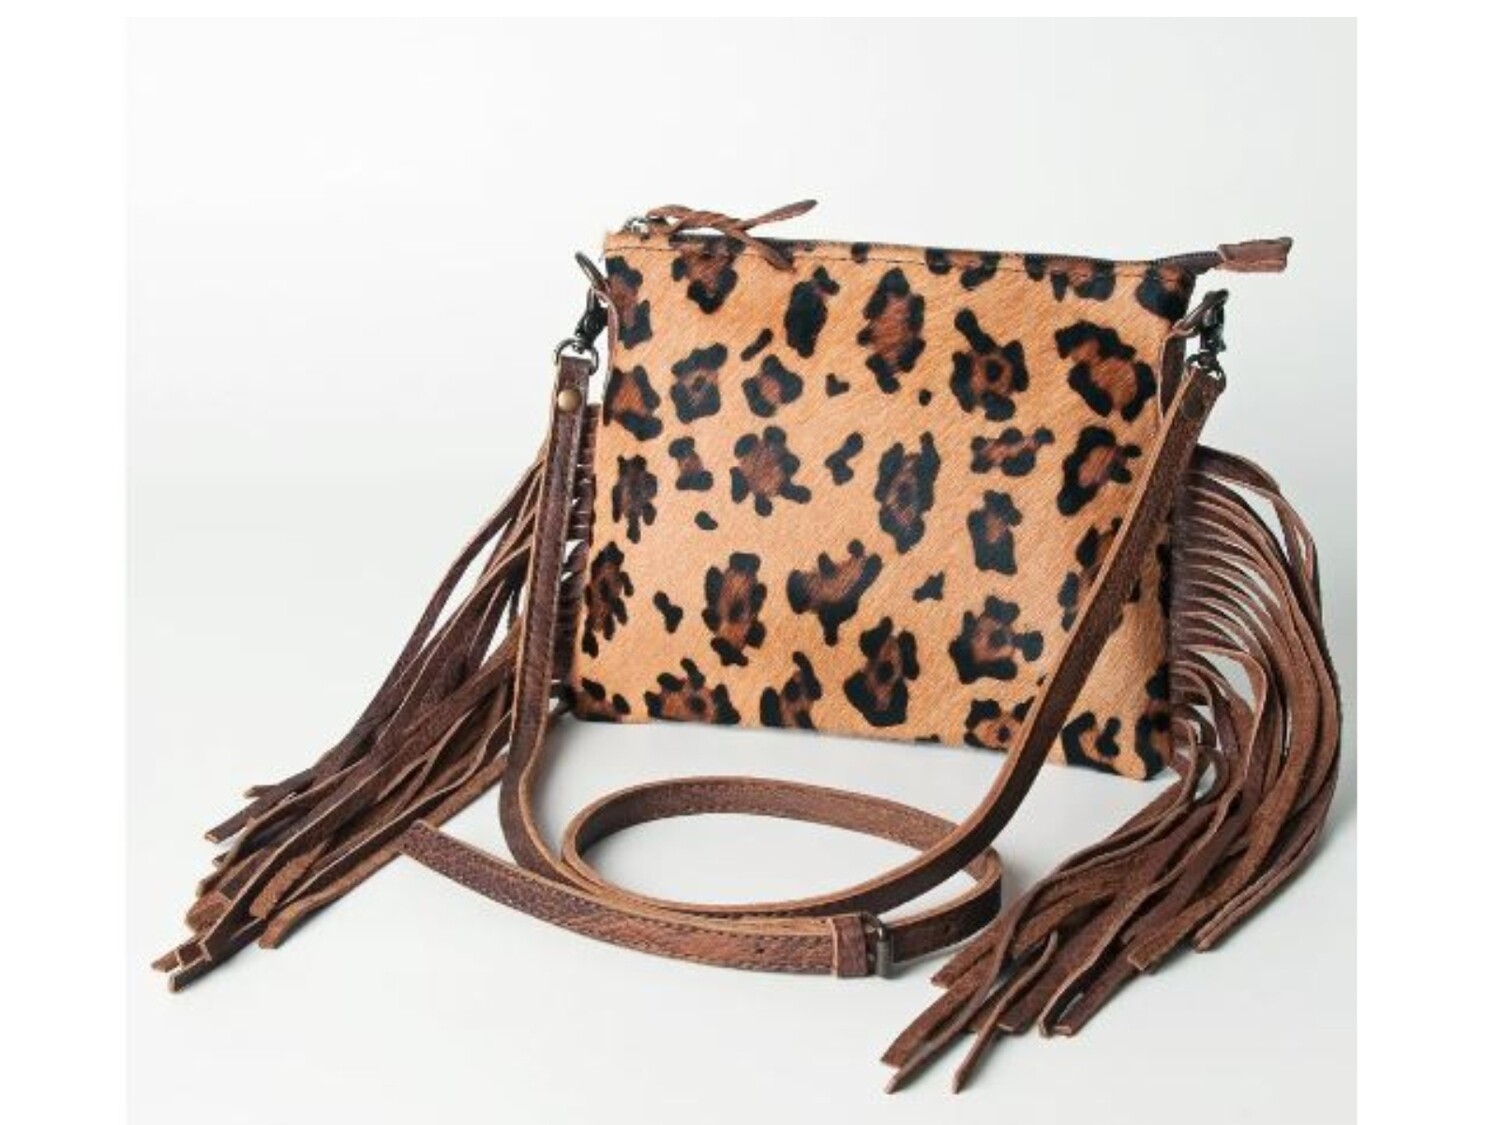 Leopard Print Hide Crossbody American Darling Bag with Fringe